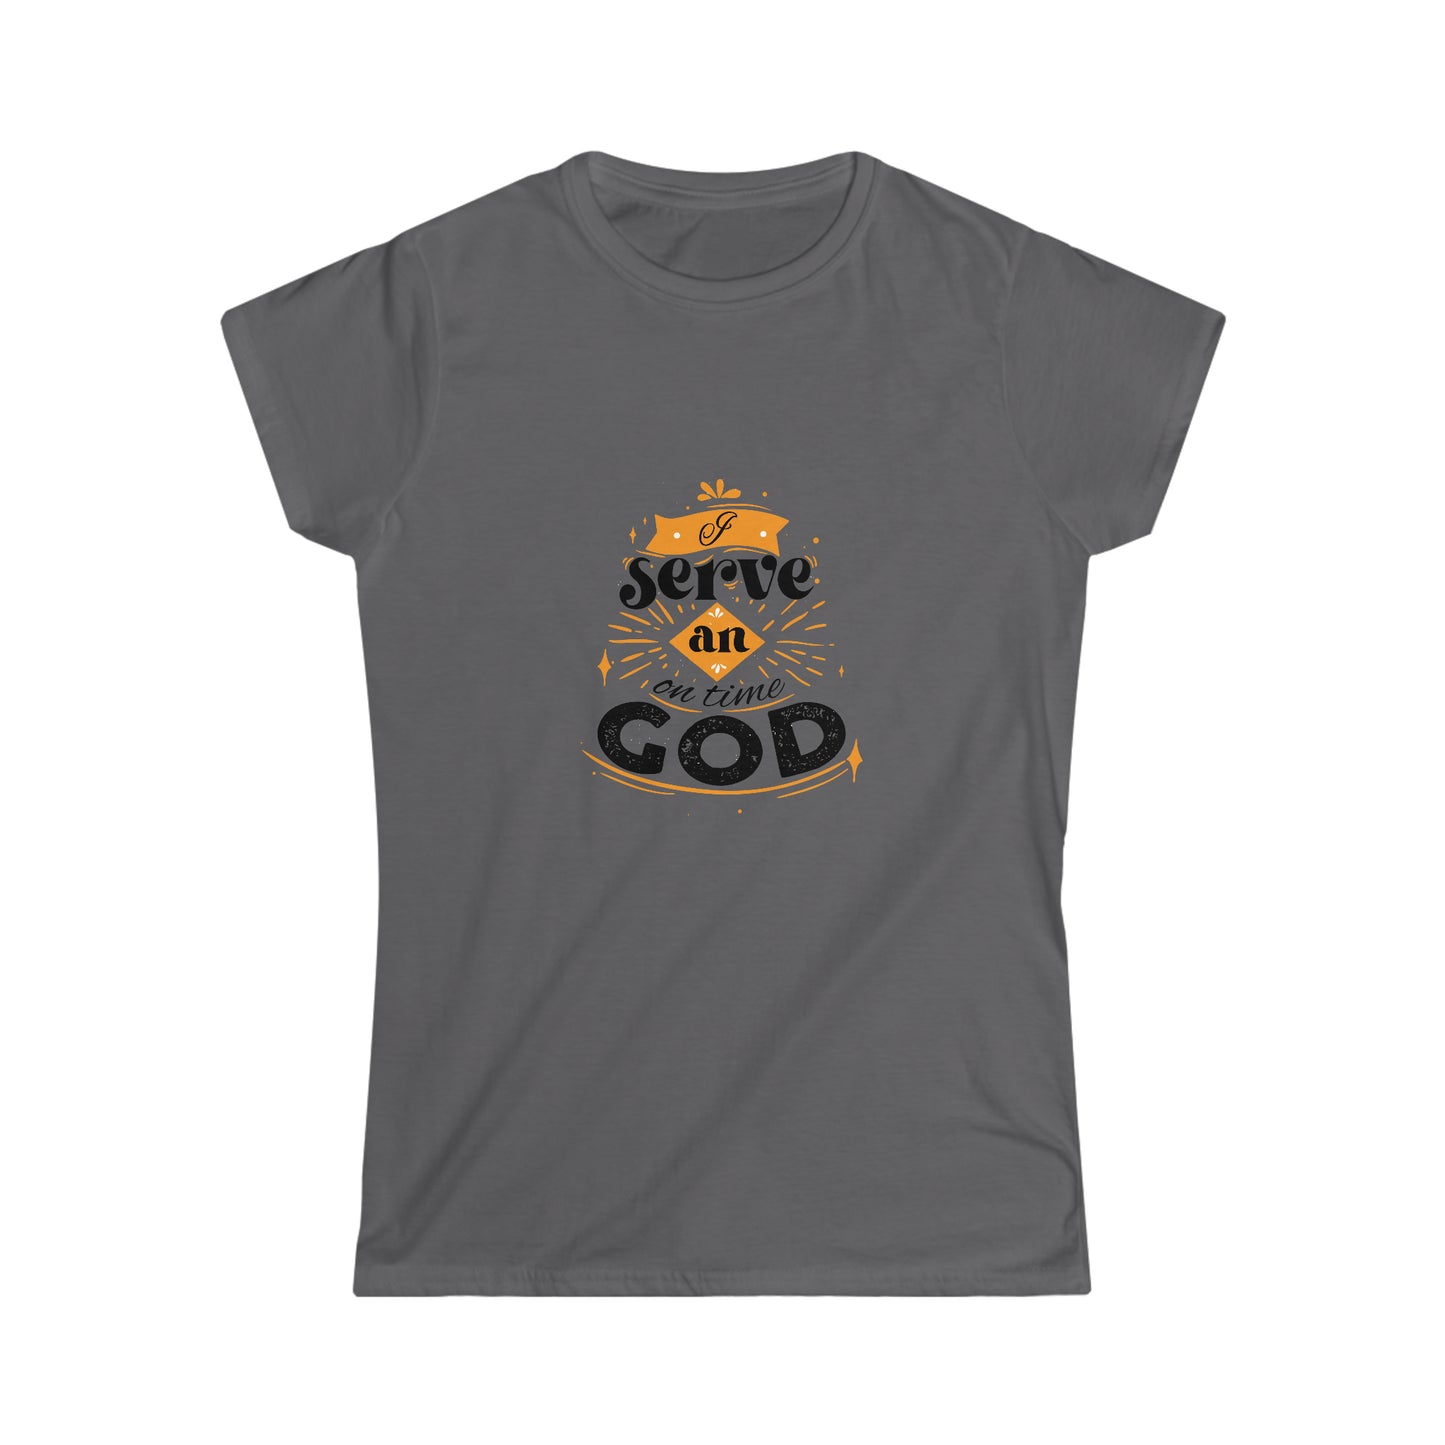 I Serve An On Time God Women's T-shirt